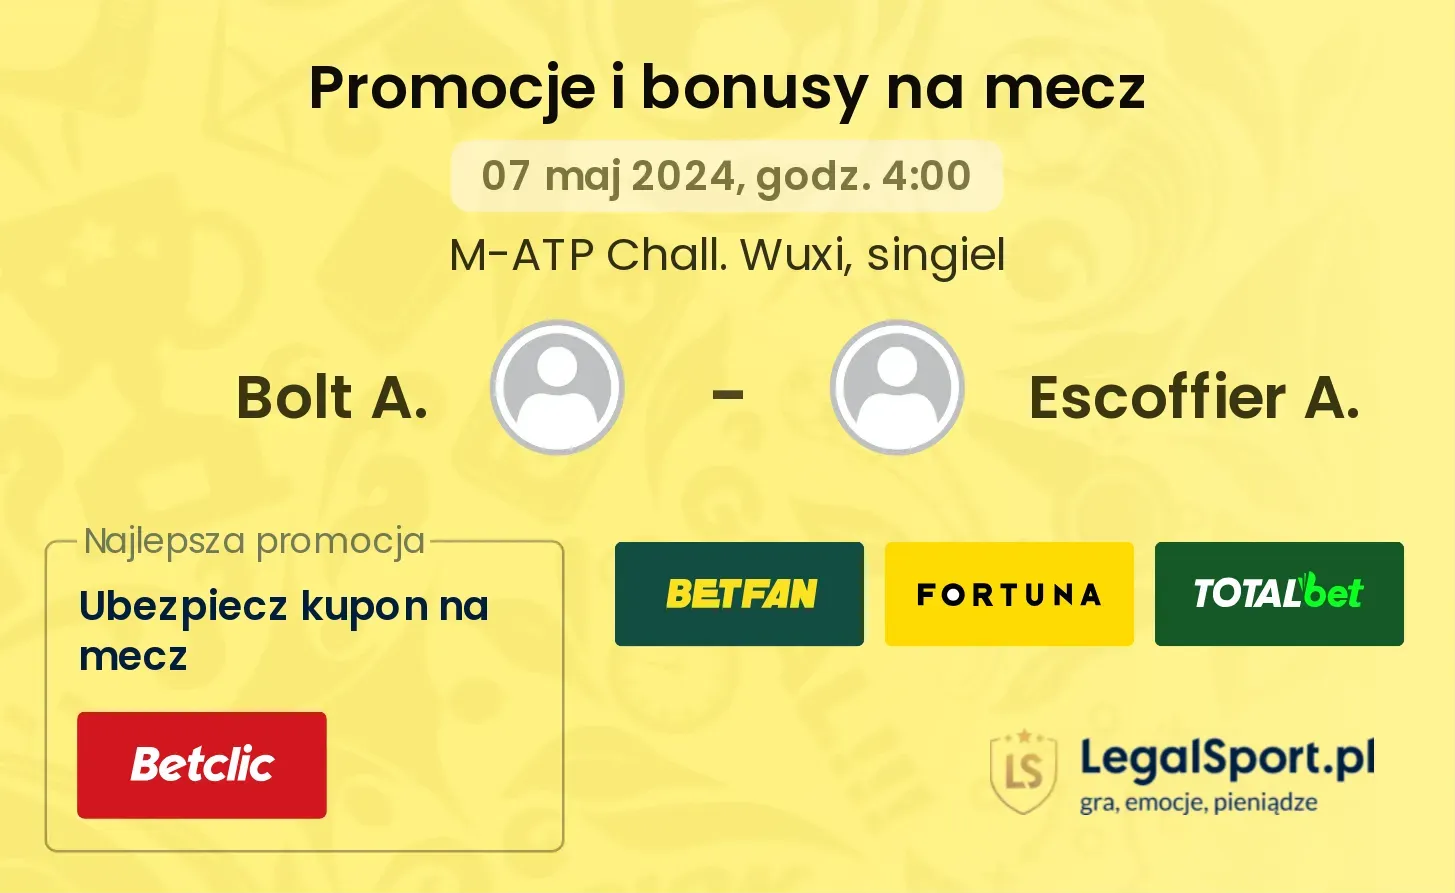 Bolt A. - Escoffier A. promocje bonusy na mecz